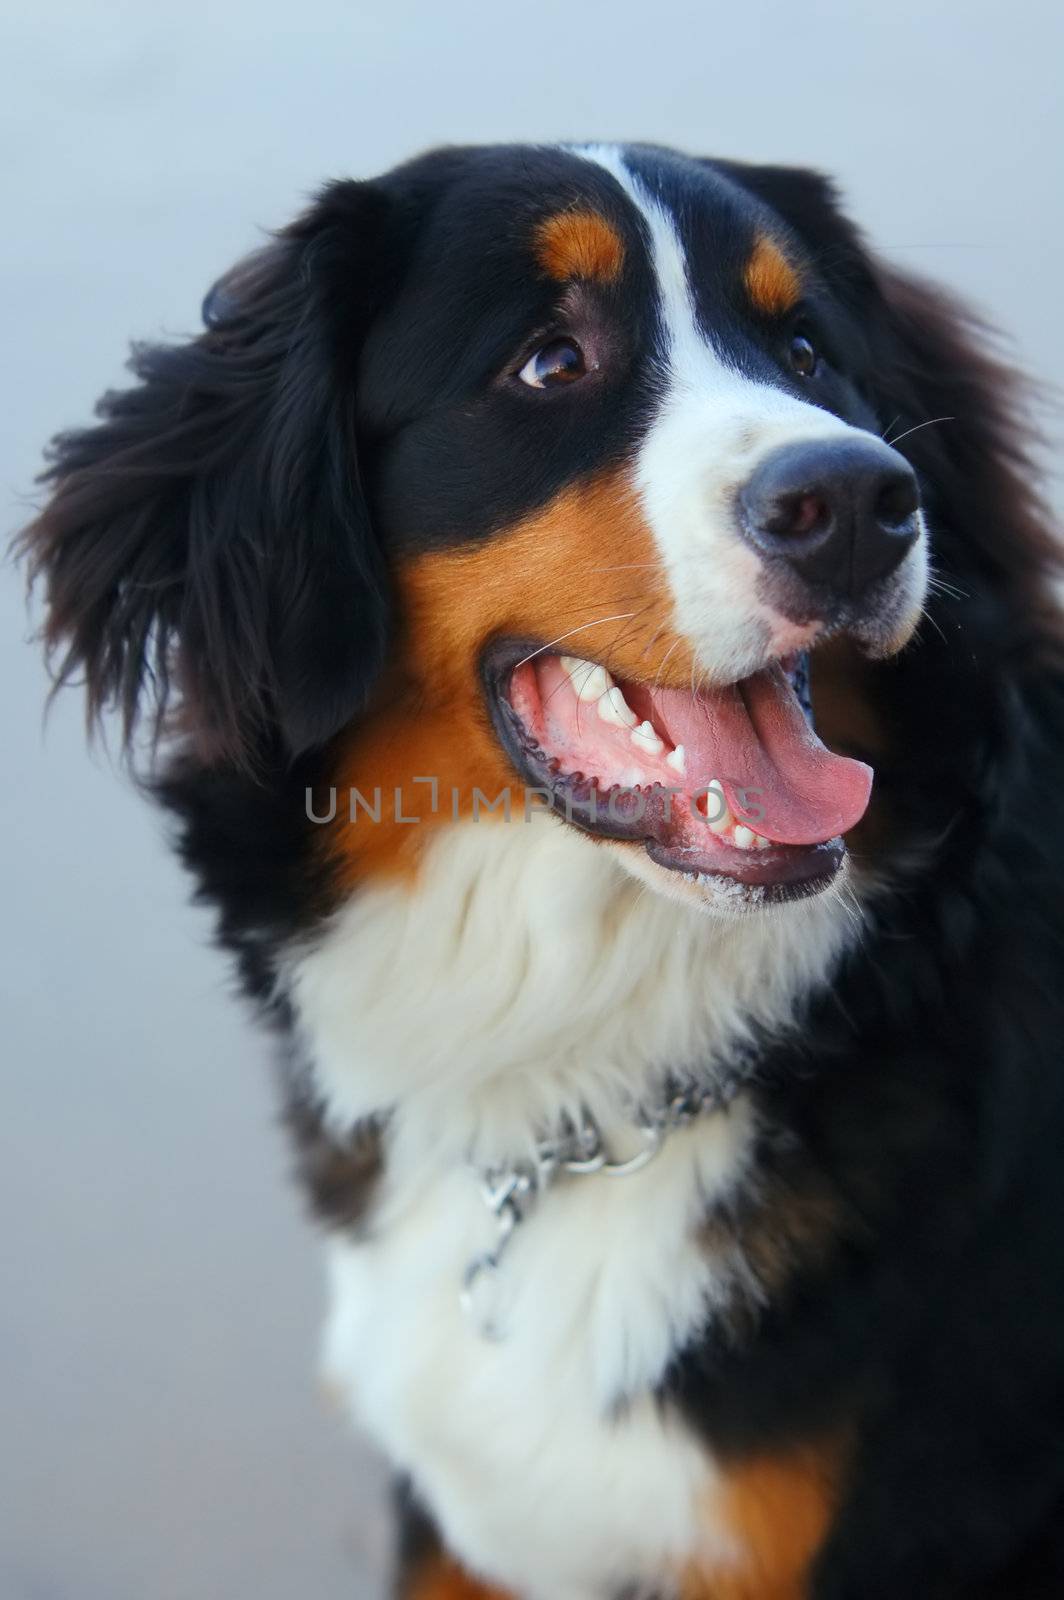 Beautiful dog portrait by photocreo